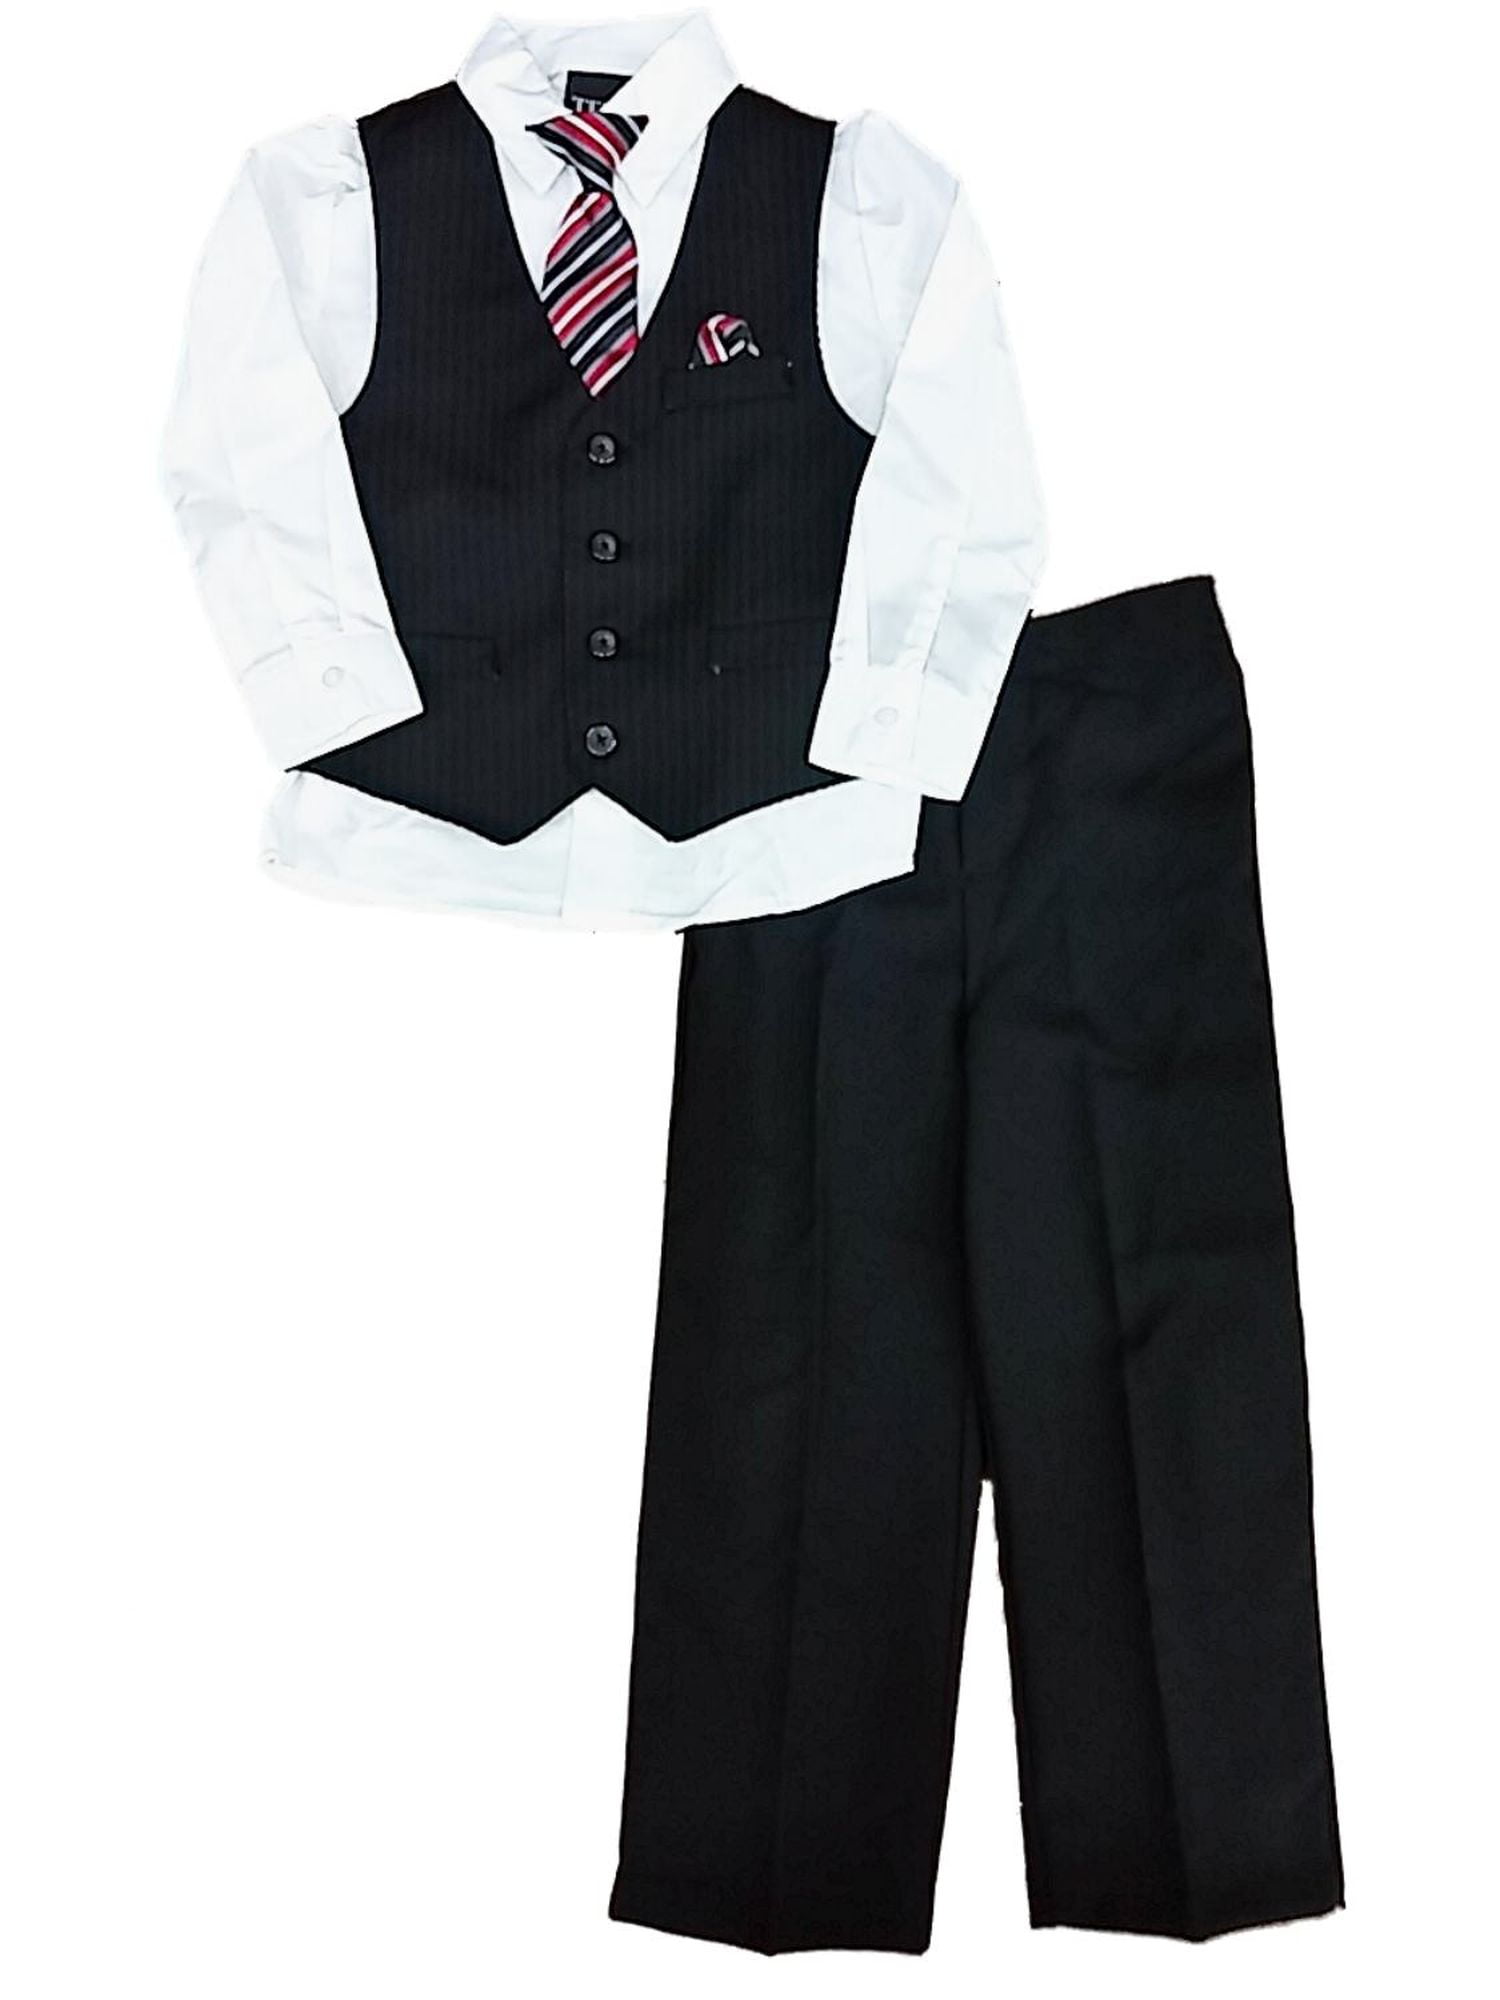 TFW - Toddler Boys Black Vest White Shirt Clip on Tie & Black Pants ...